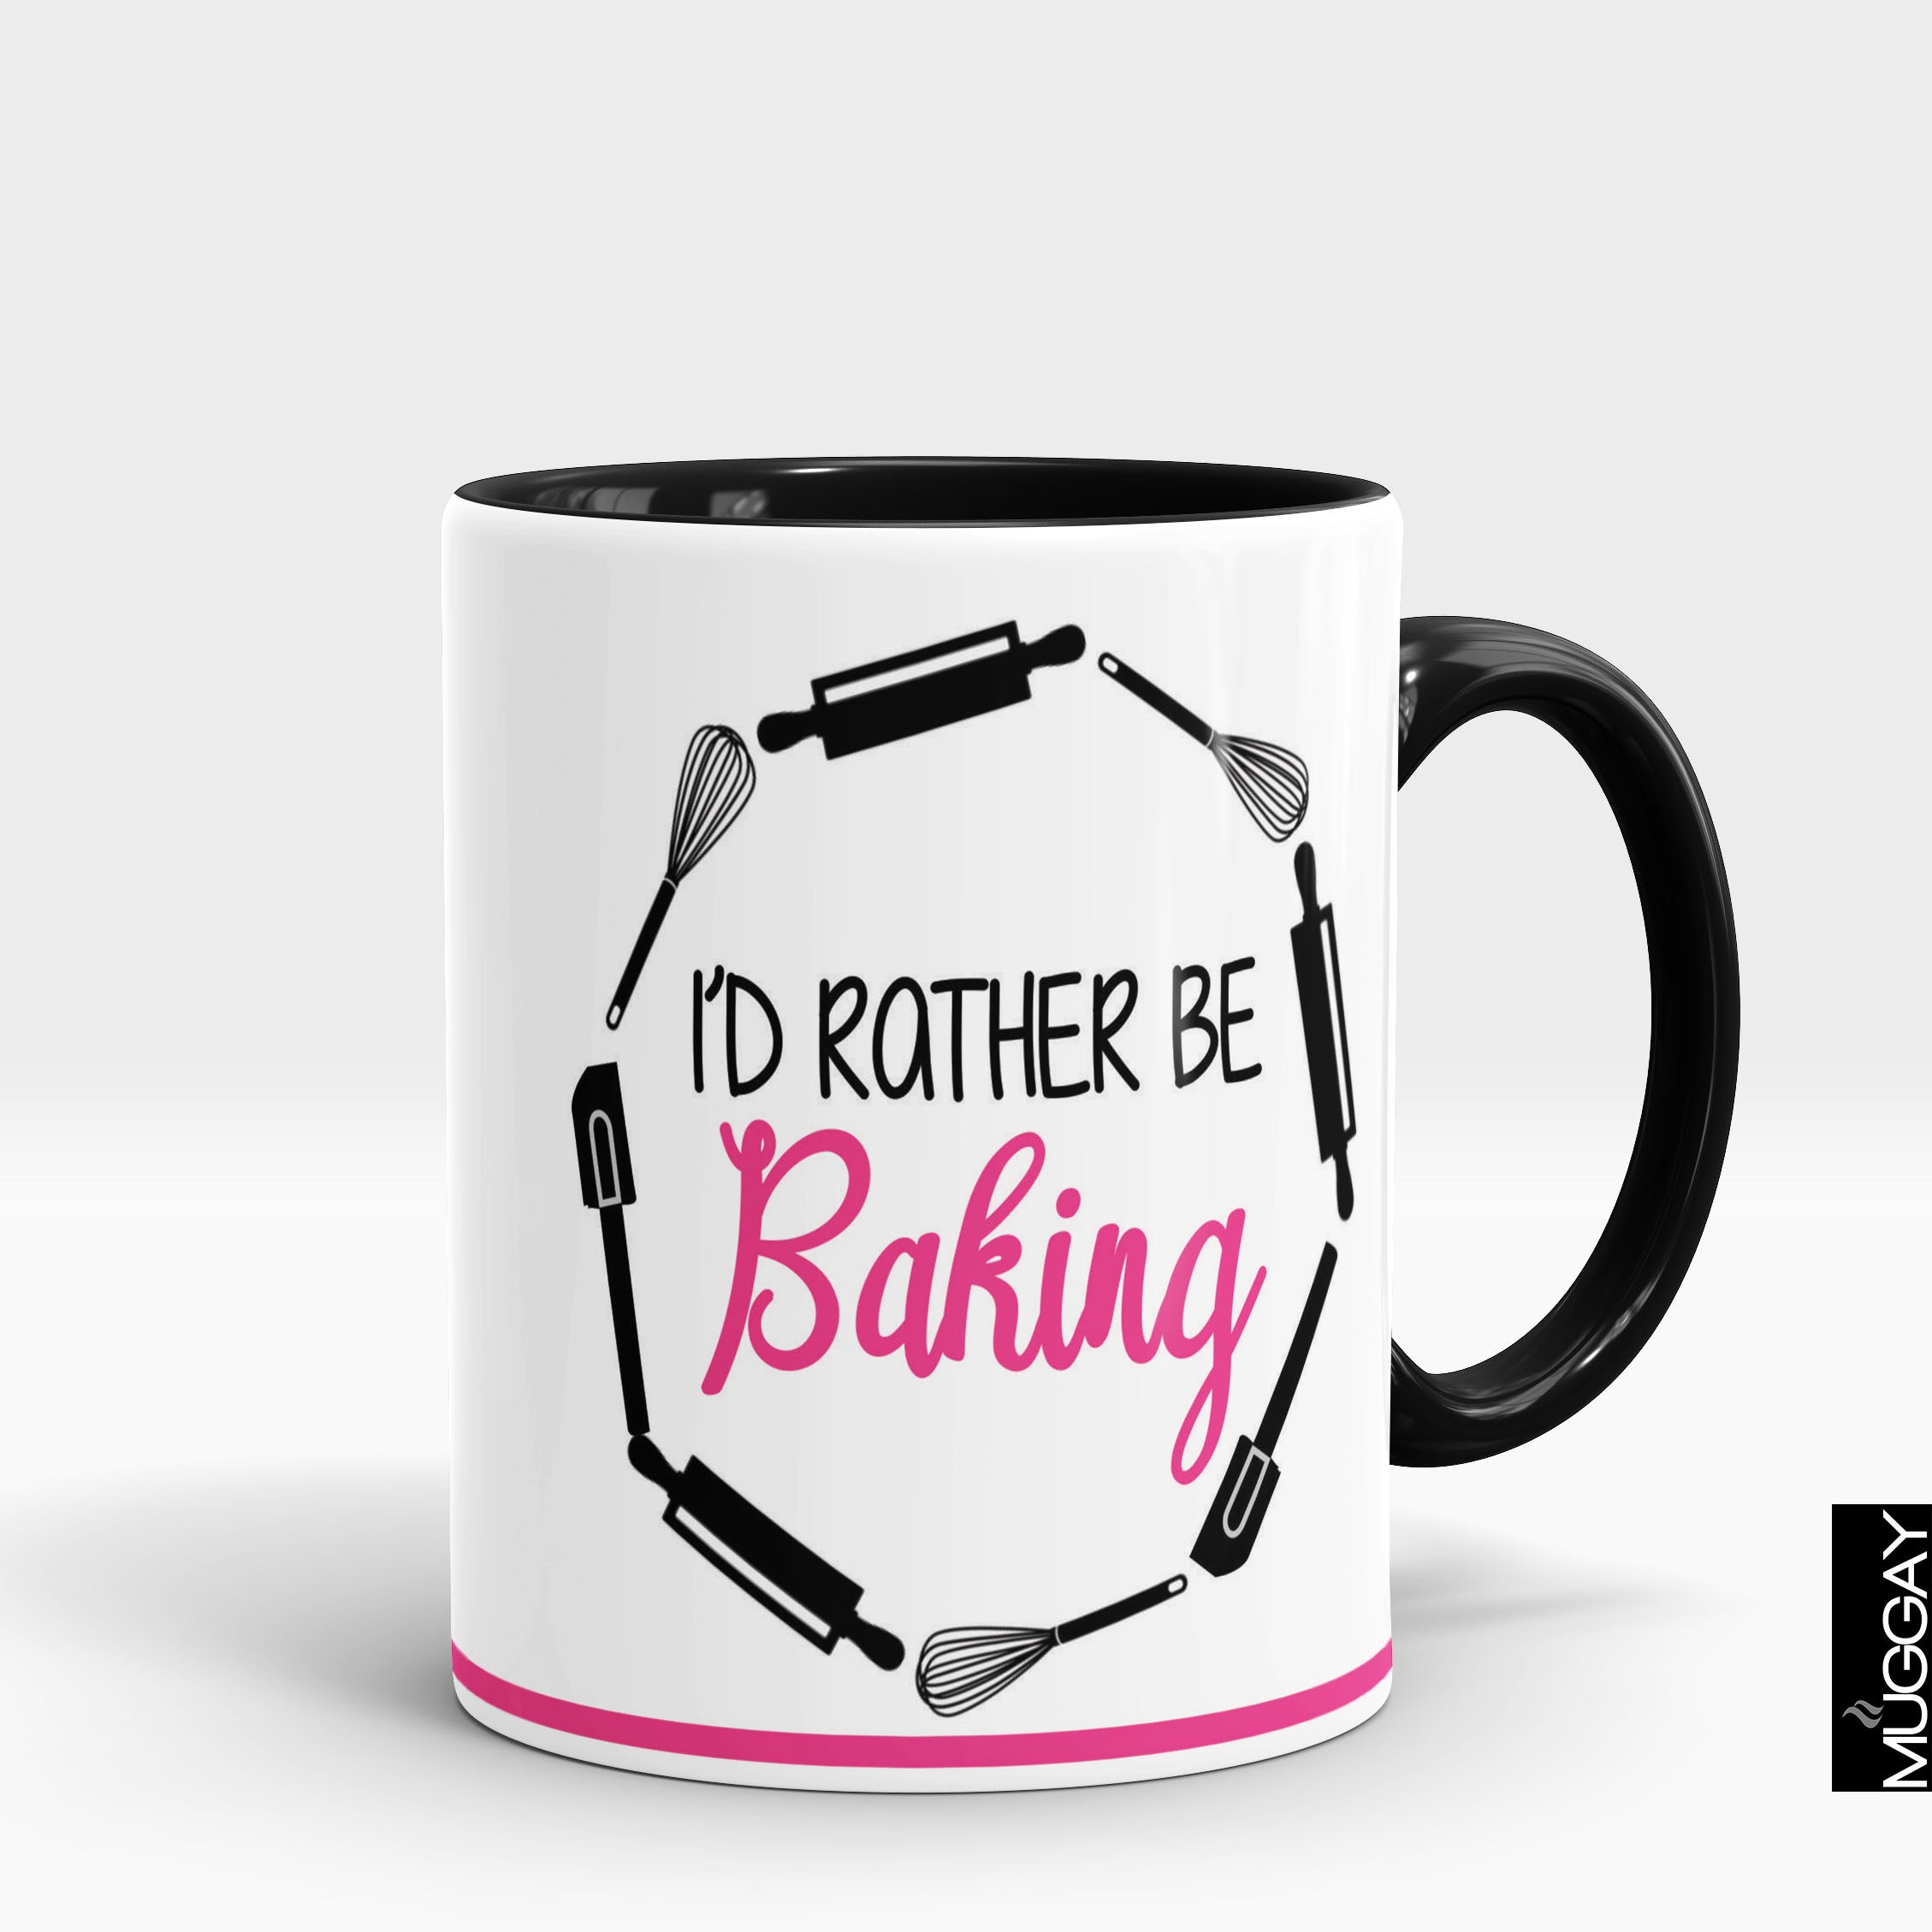 Baking Mug - bkr12 - Muggay.com - Mugs - Printing shop - truck Art mugs - Mug printing - Customized printing - Digital printing - Muggay 